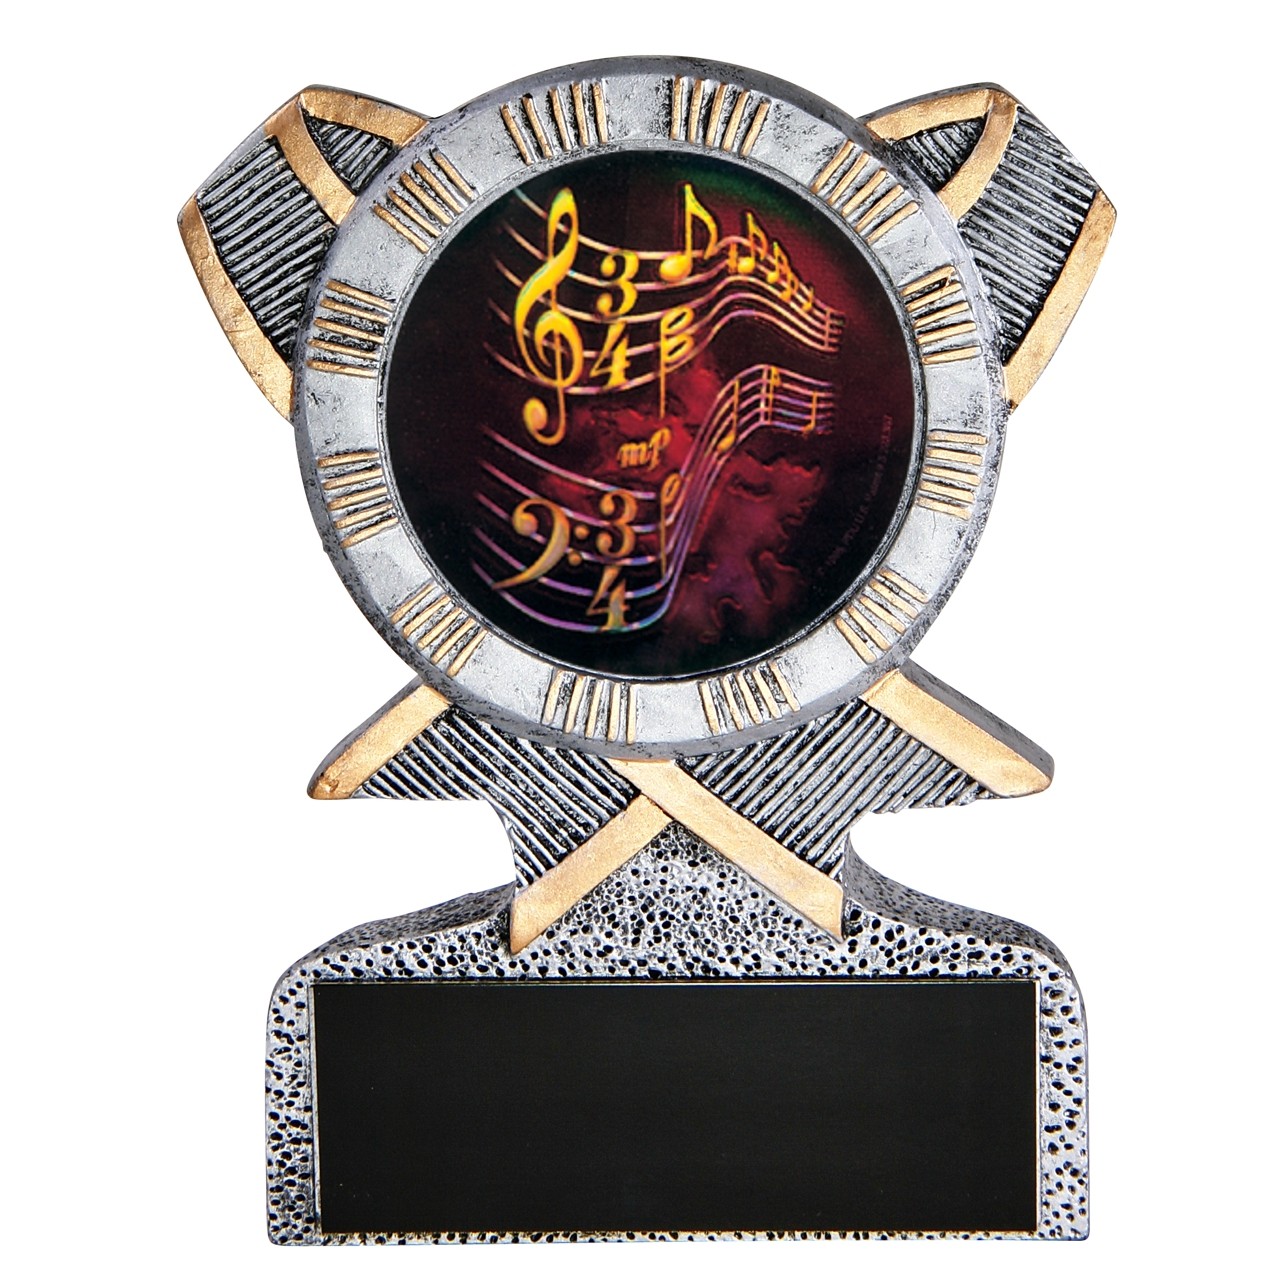 MUSIC MEDAL trophy & ribbon award trophies 